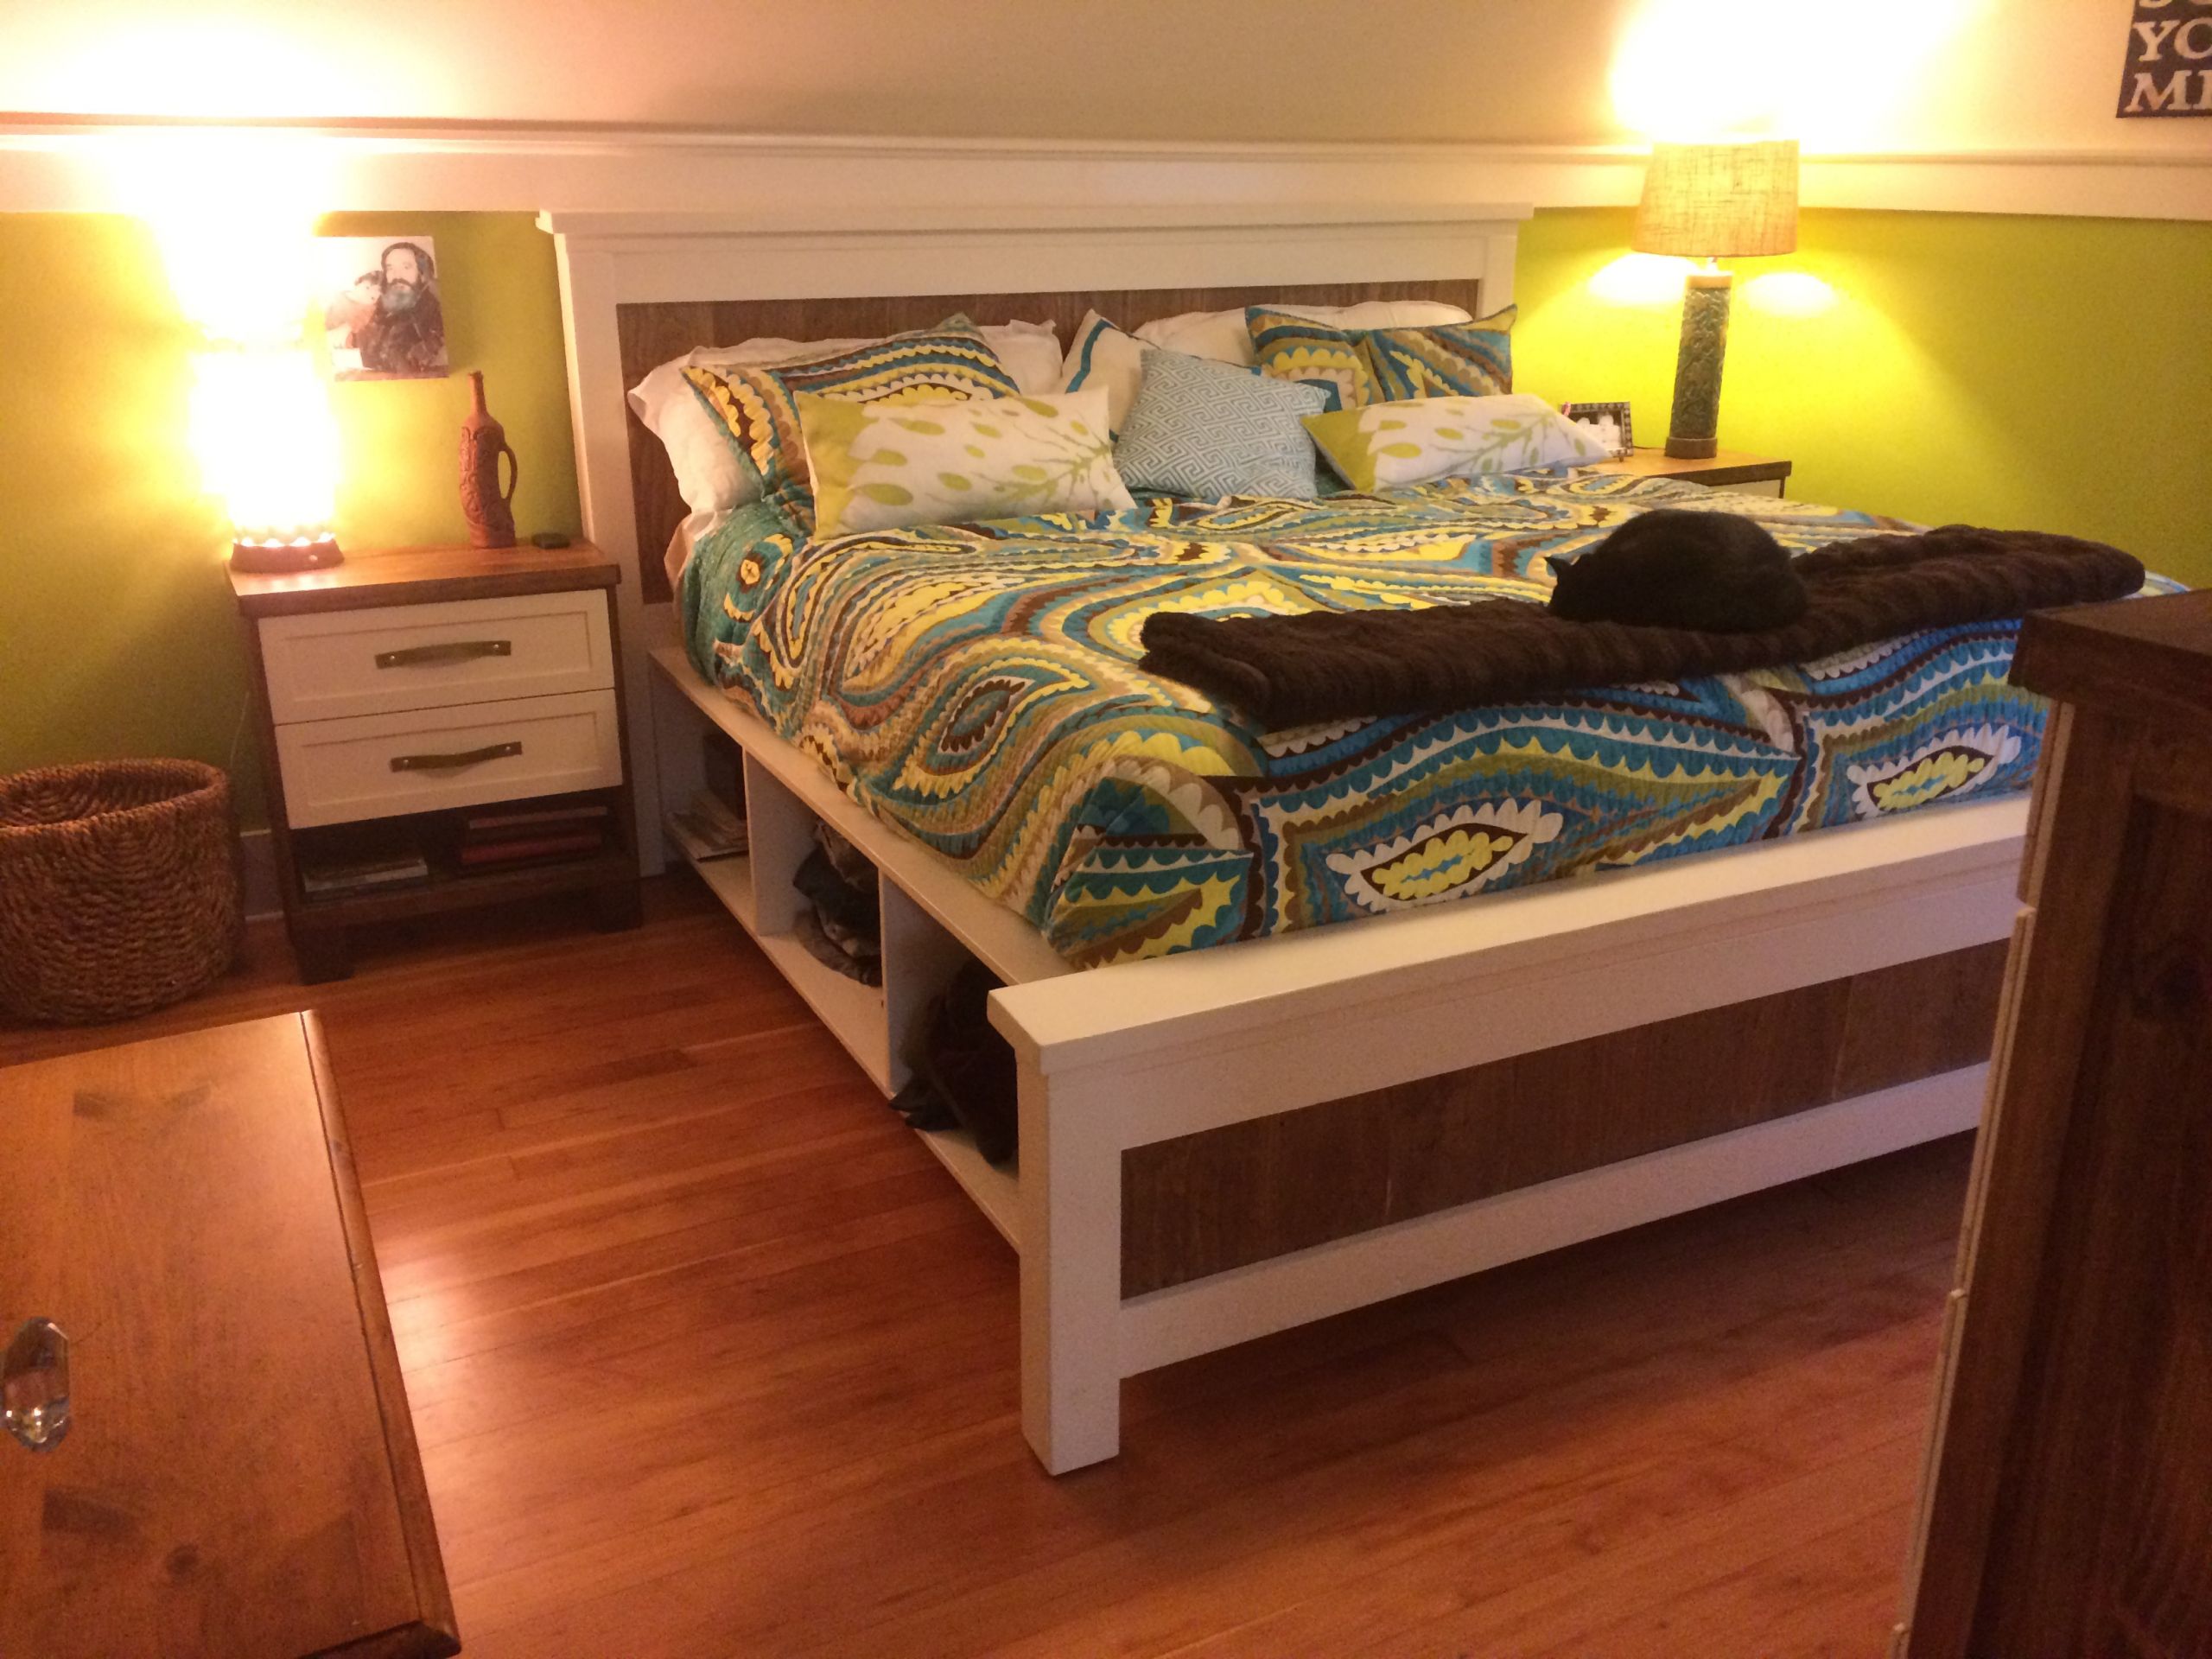 DIY King Size Bed Frame Plans
 Ana White